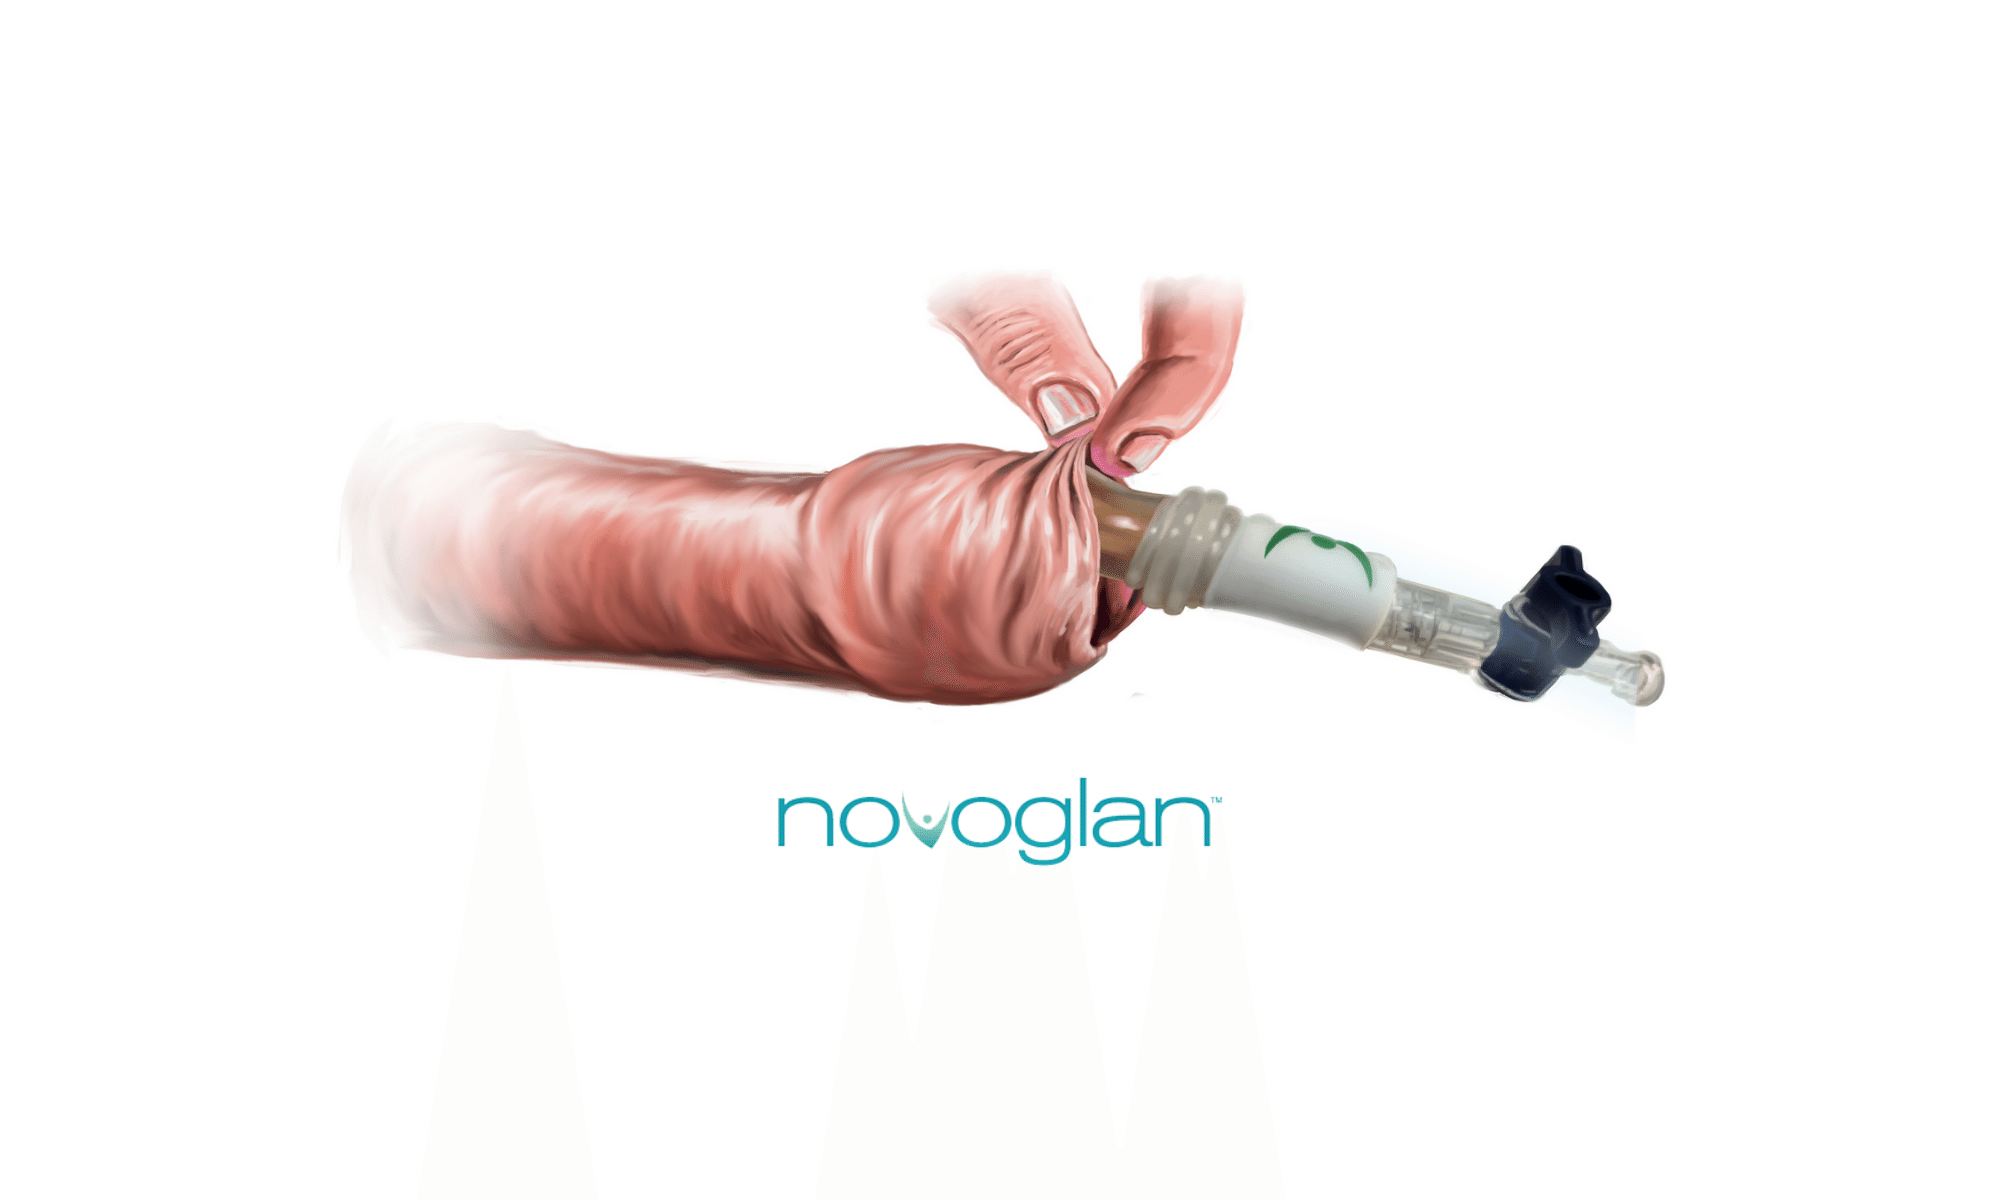 Novoglan Phimosis Treatment in UK